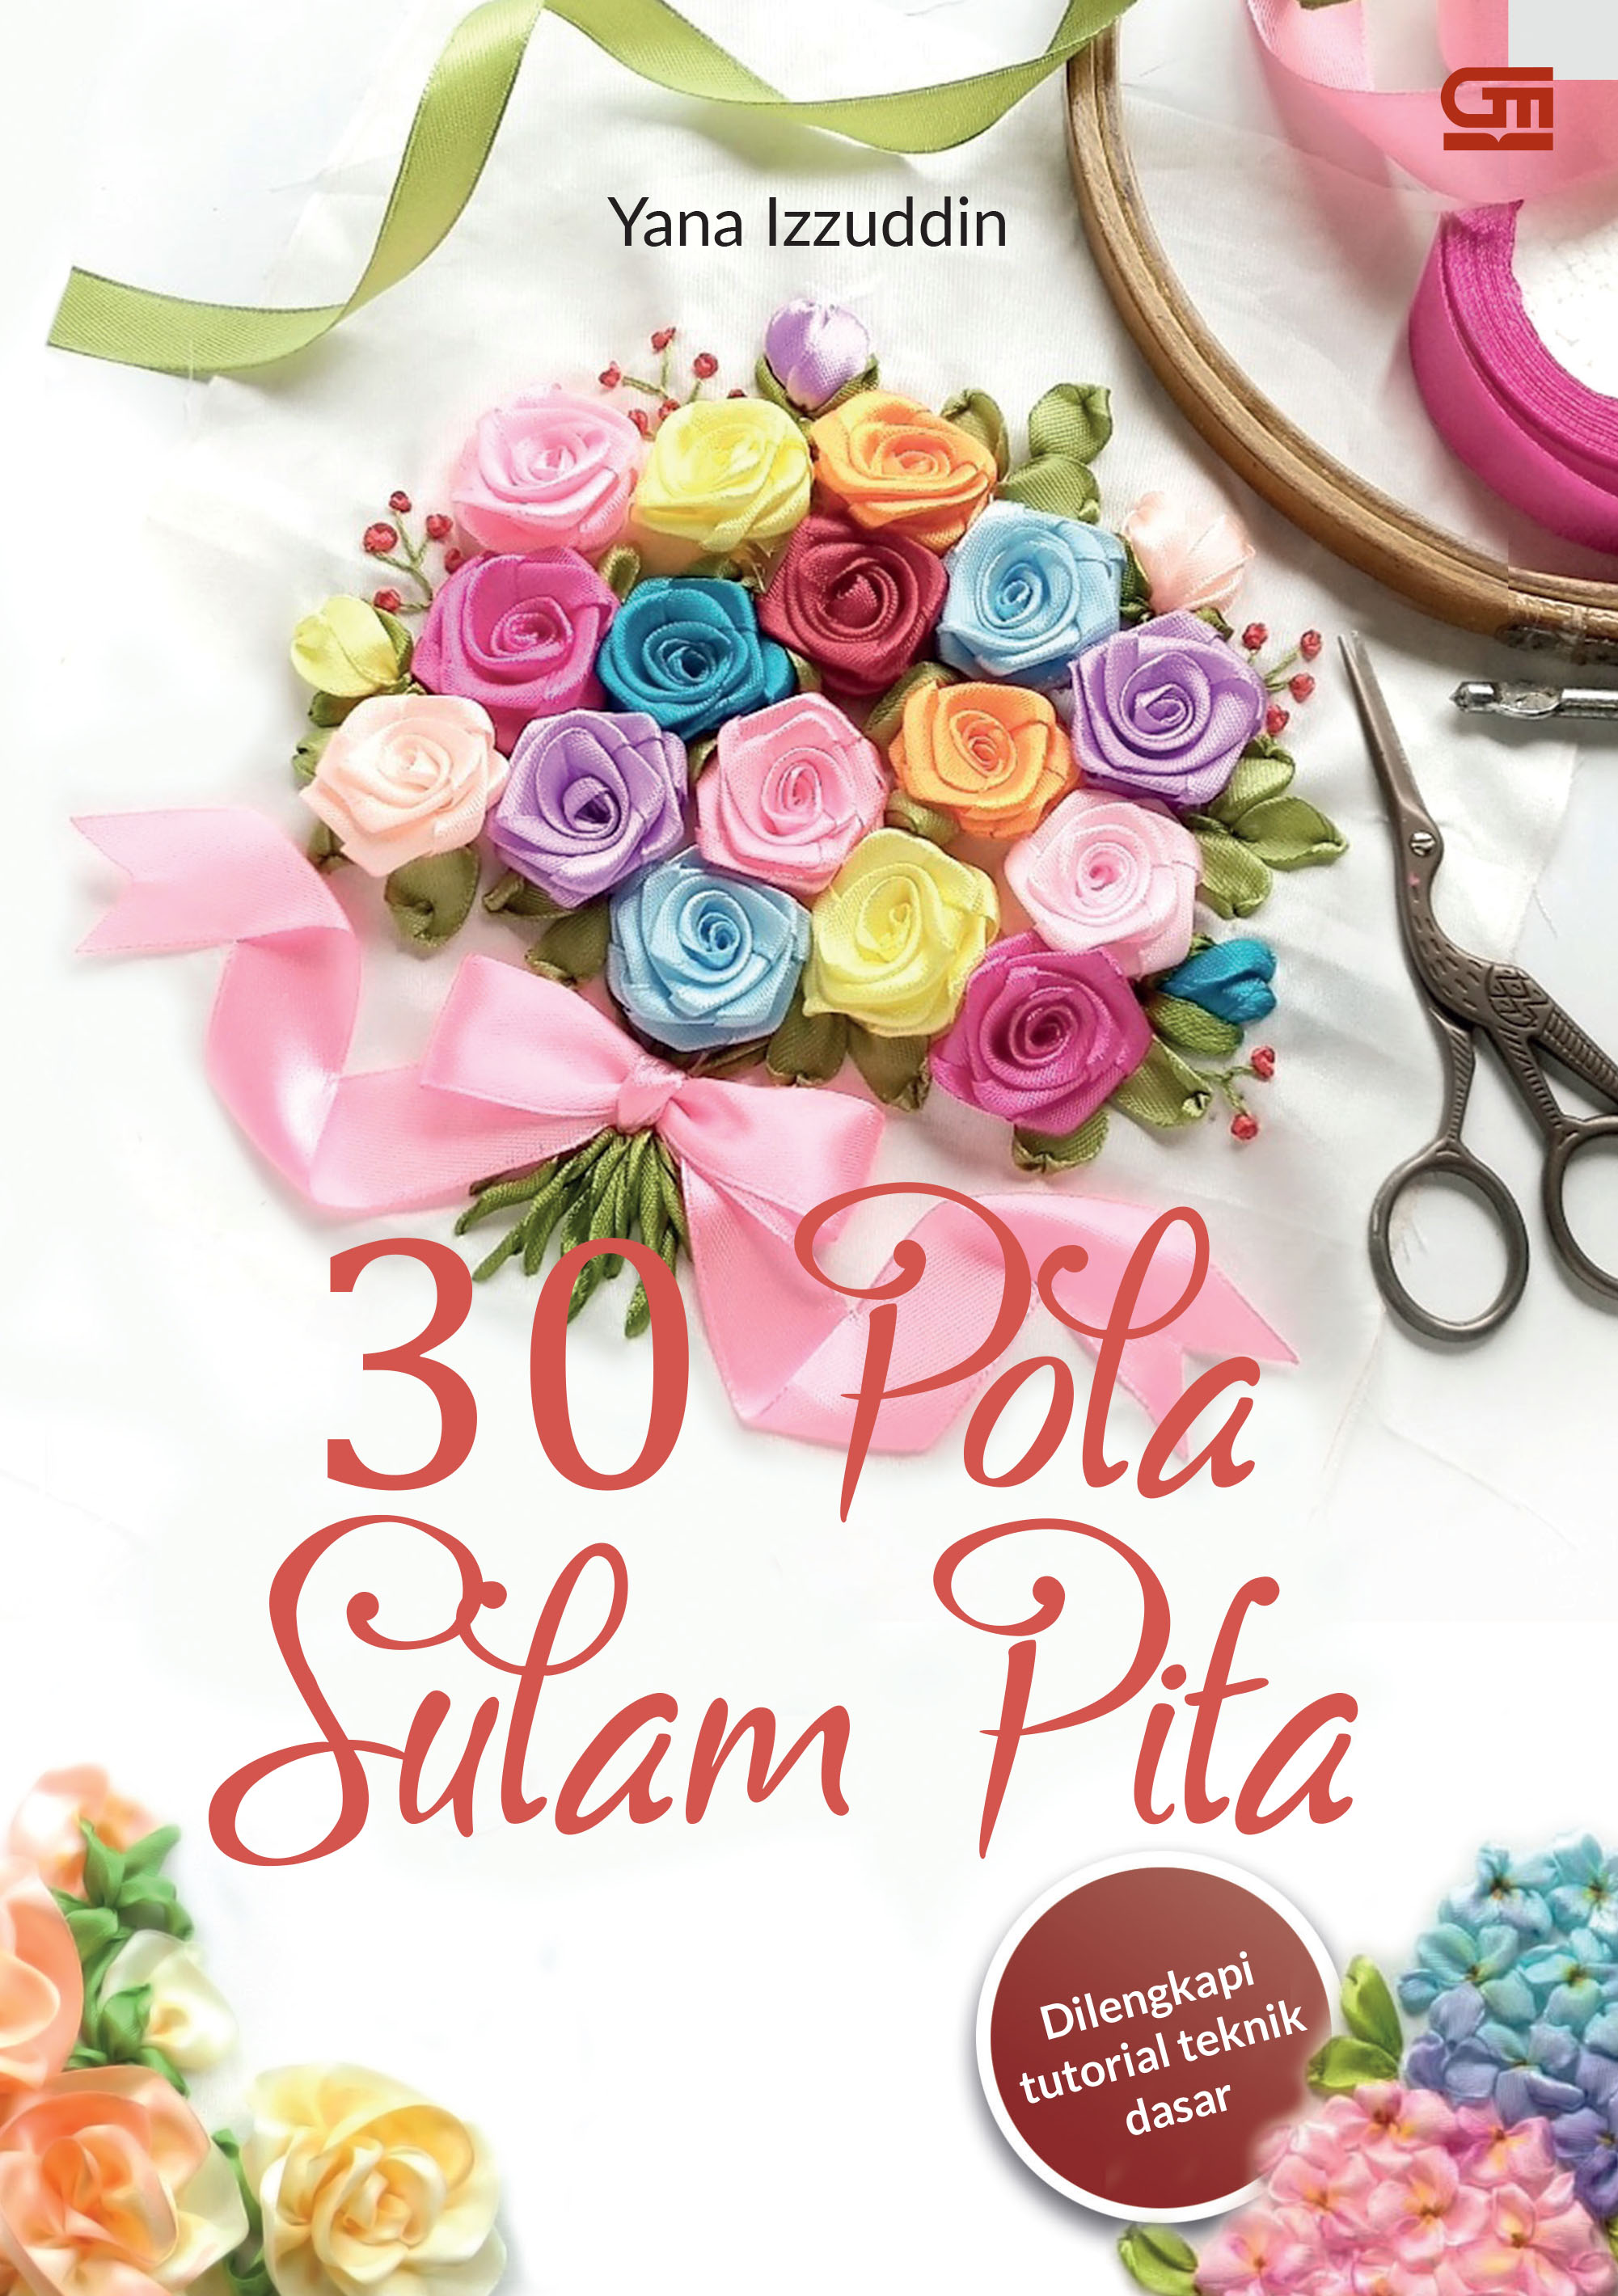 30 Pola Sulam Pita